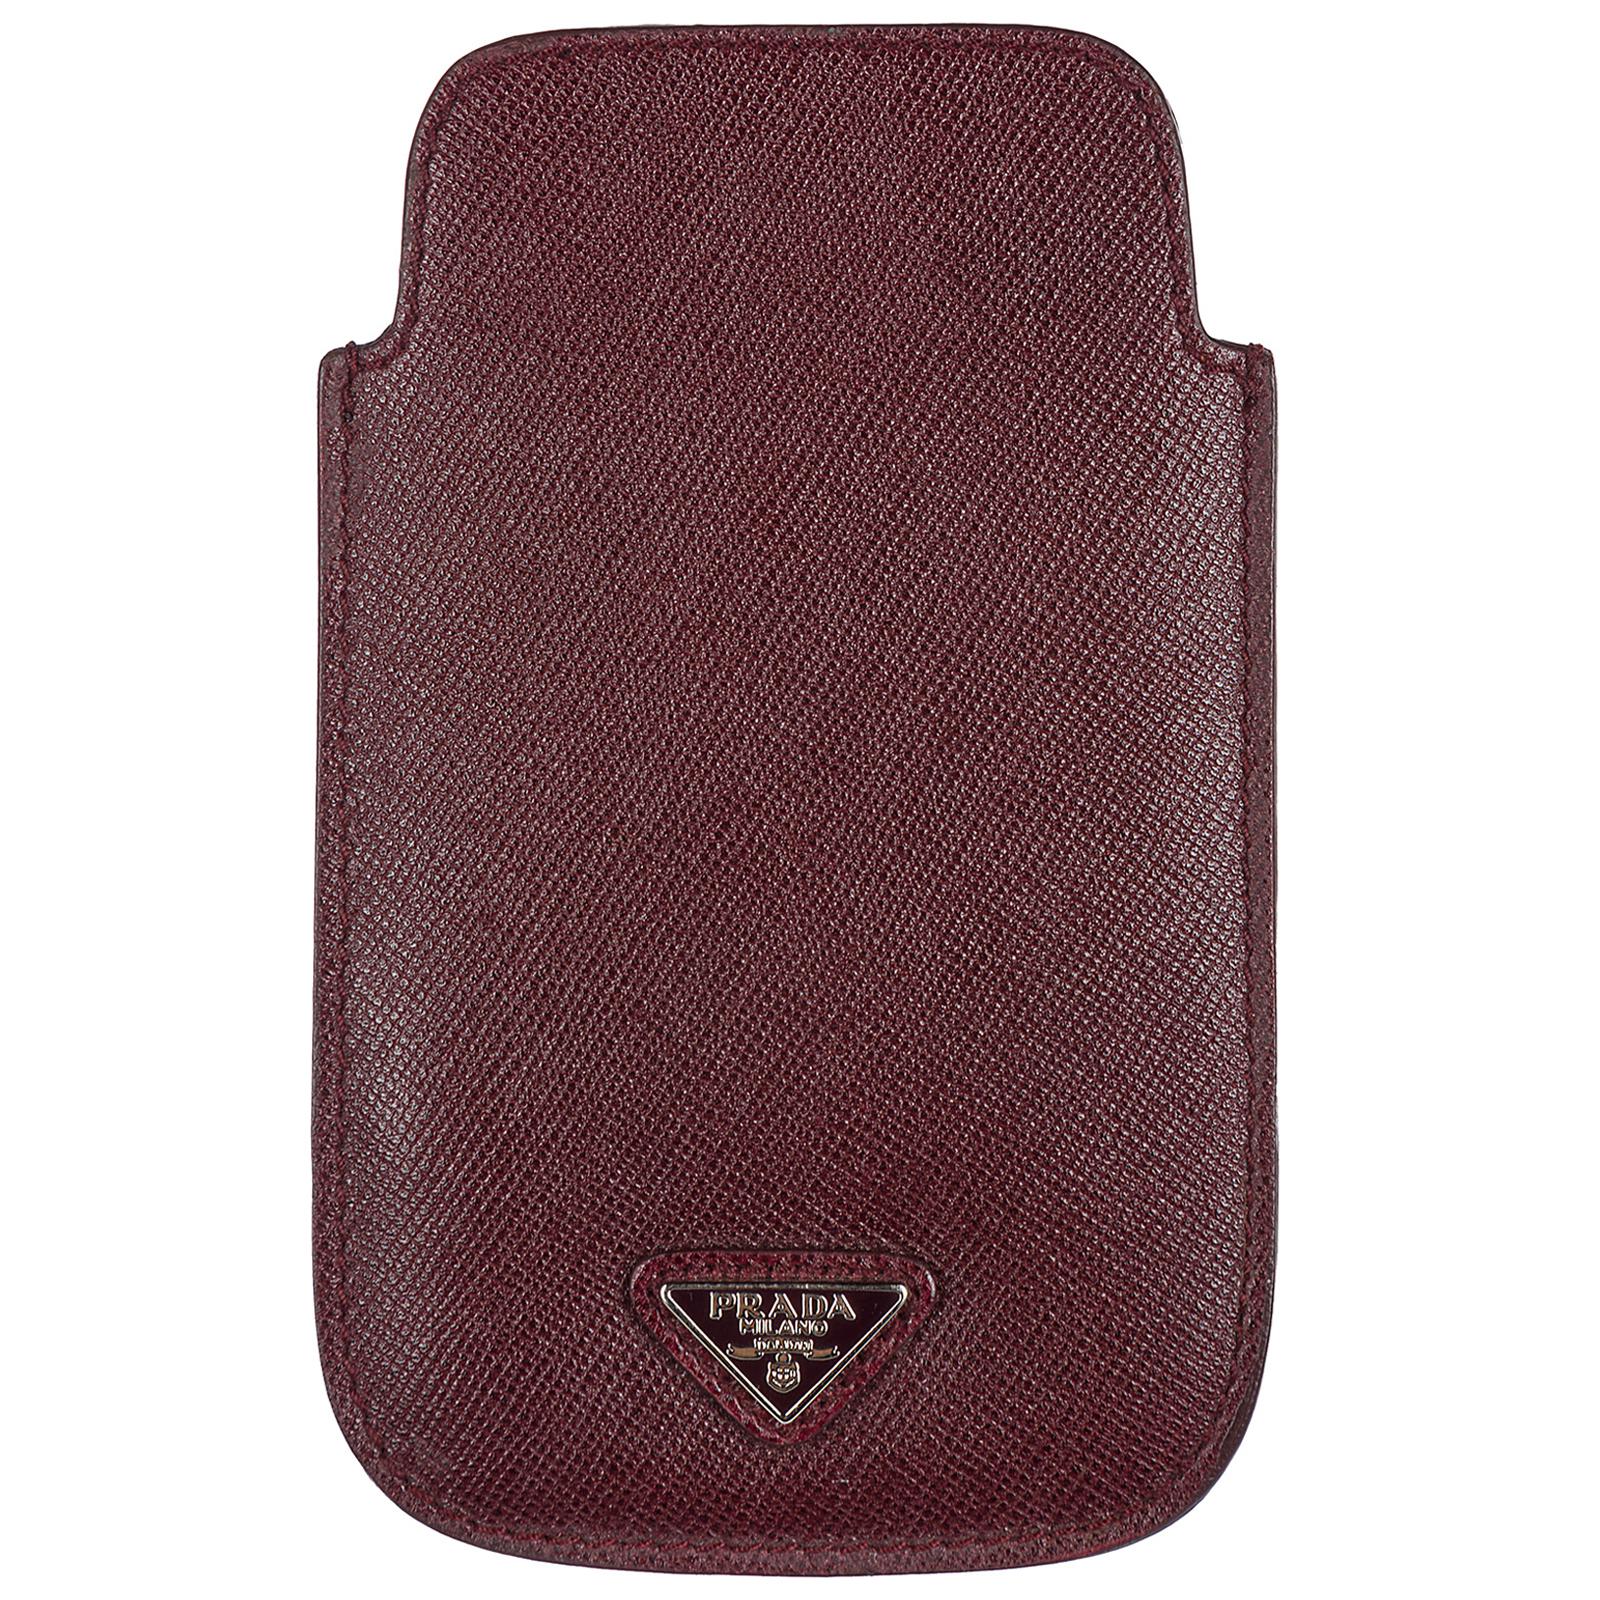 Prada Leather Cover Case Iphone 5 5s in Purple - Lyst